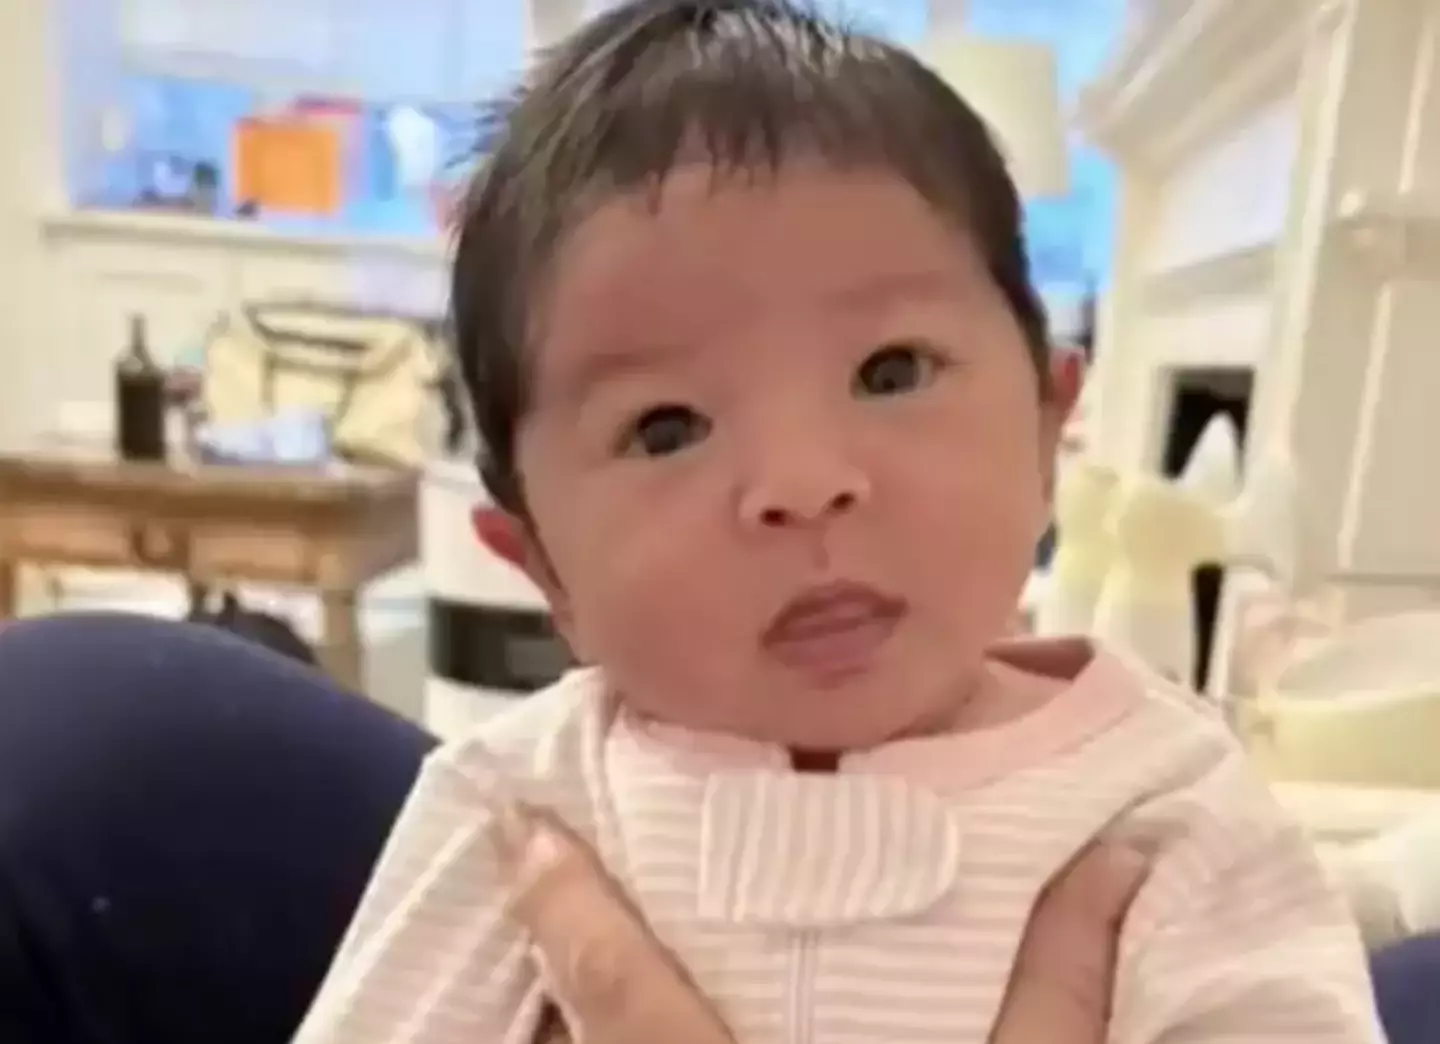 Robert De Niro shares his new baby with Tiffany Chen.